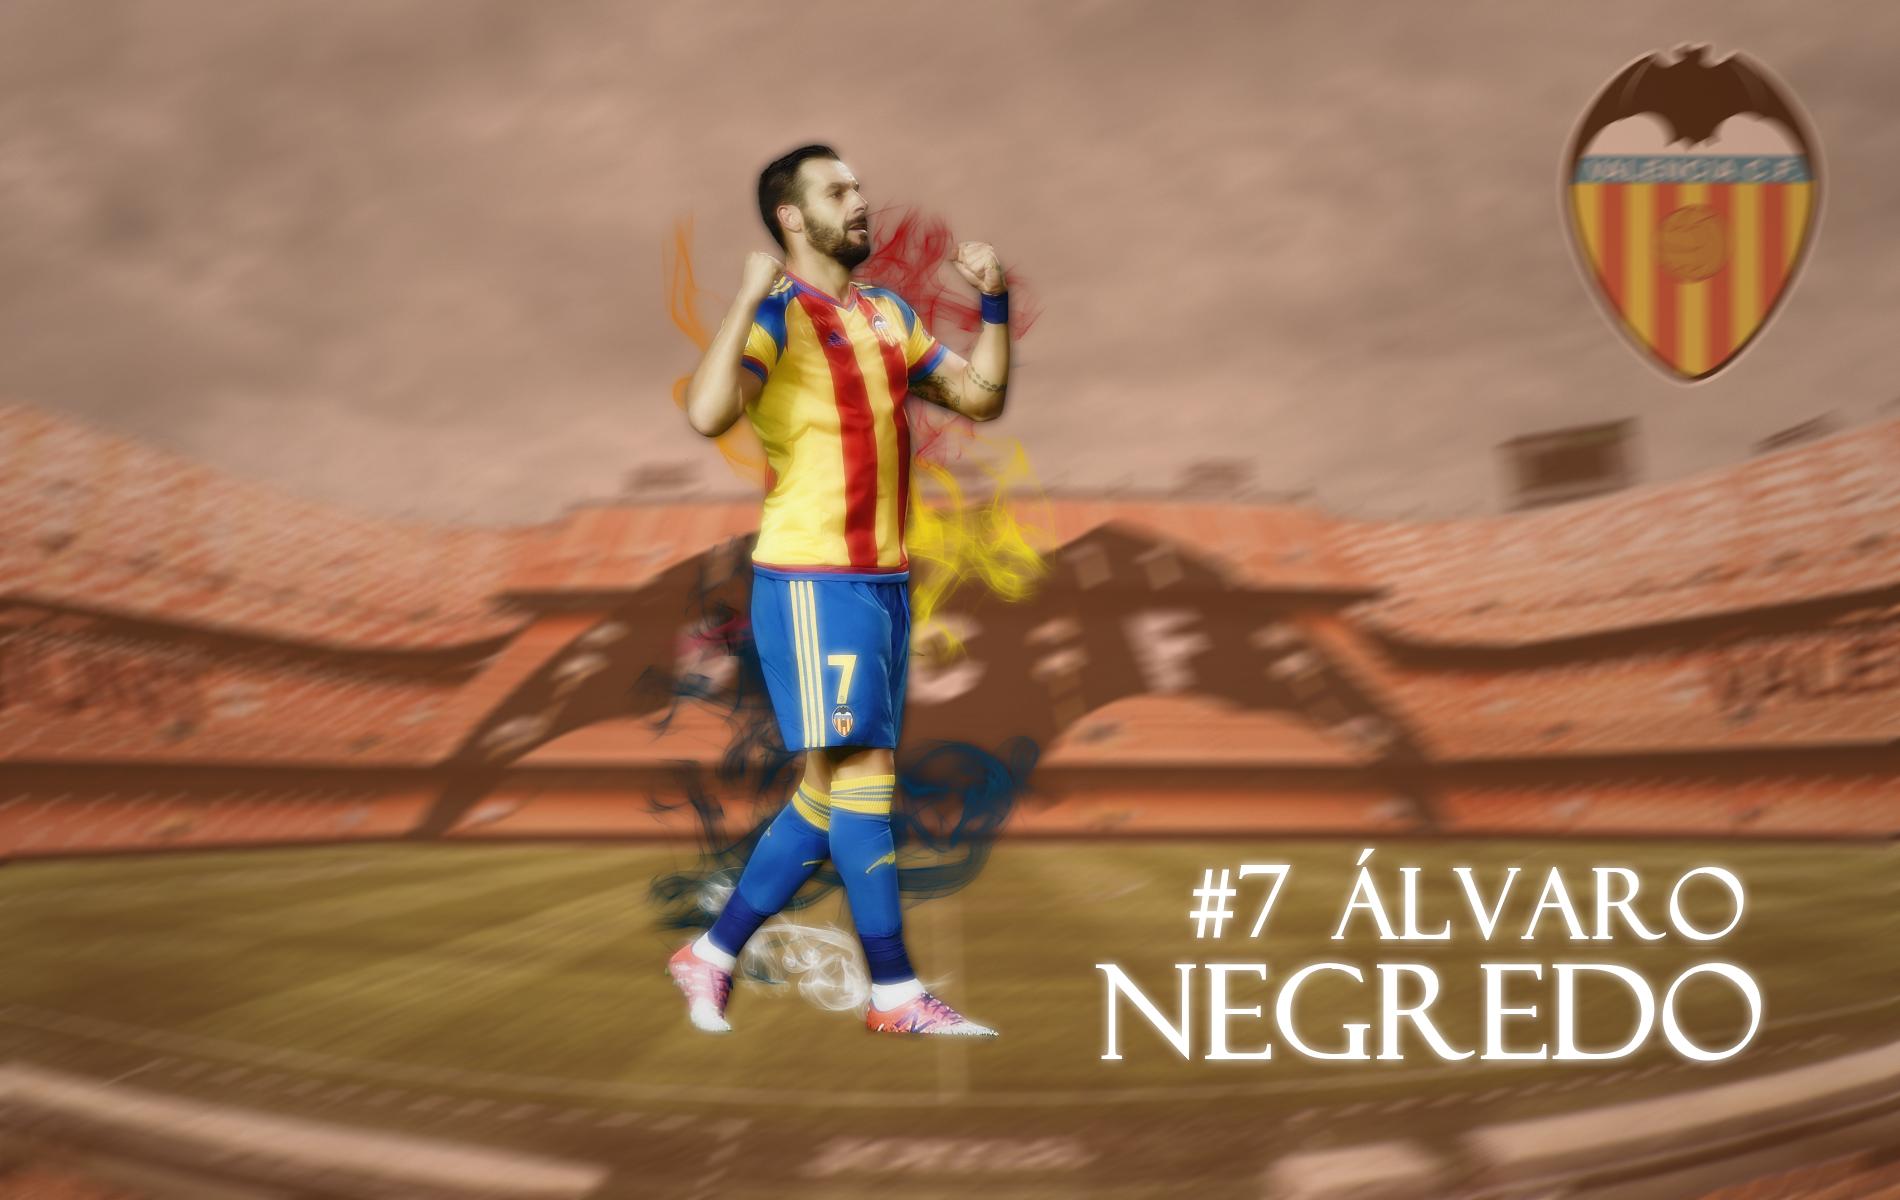 OC] Alvaro Negredo - Valencia CF (Fondo de pantalla): ValenciaCF